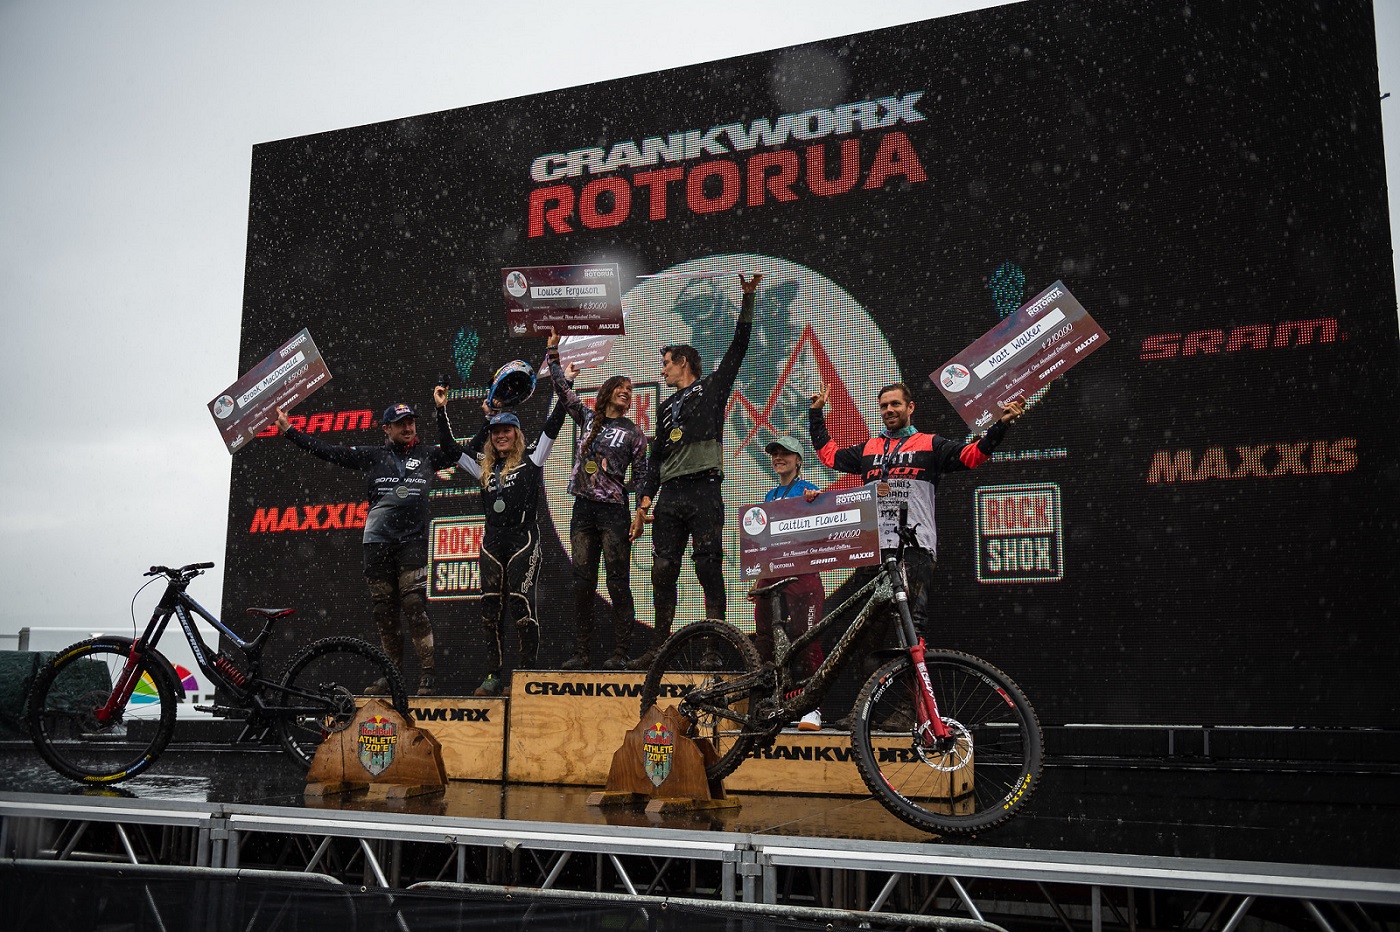 Rotorua DH podium